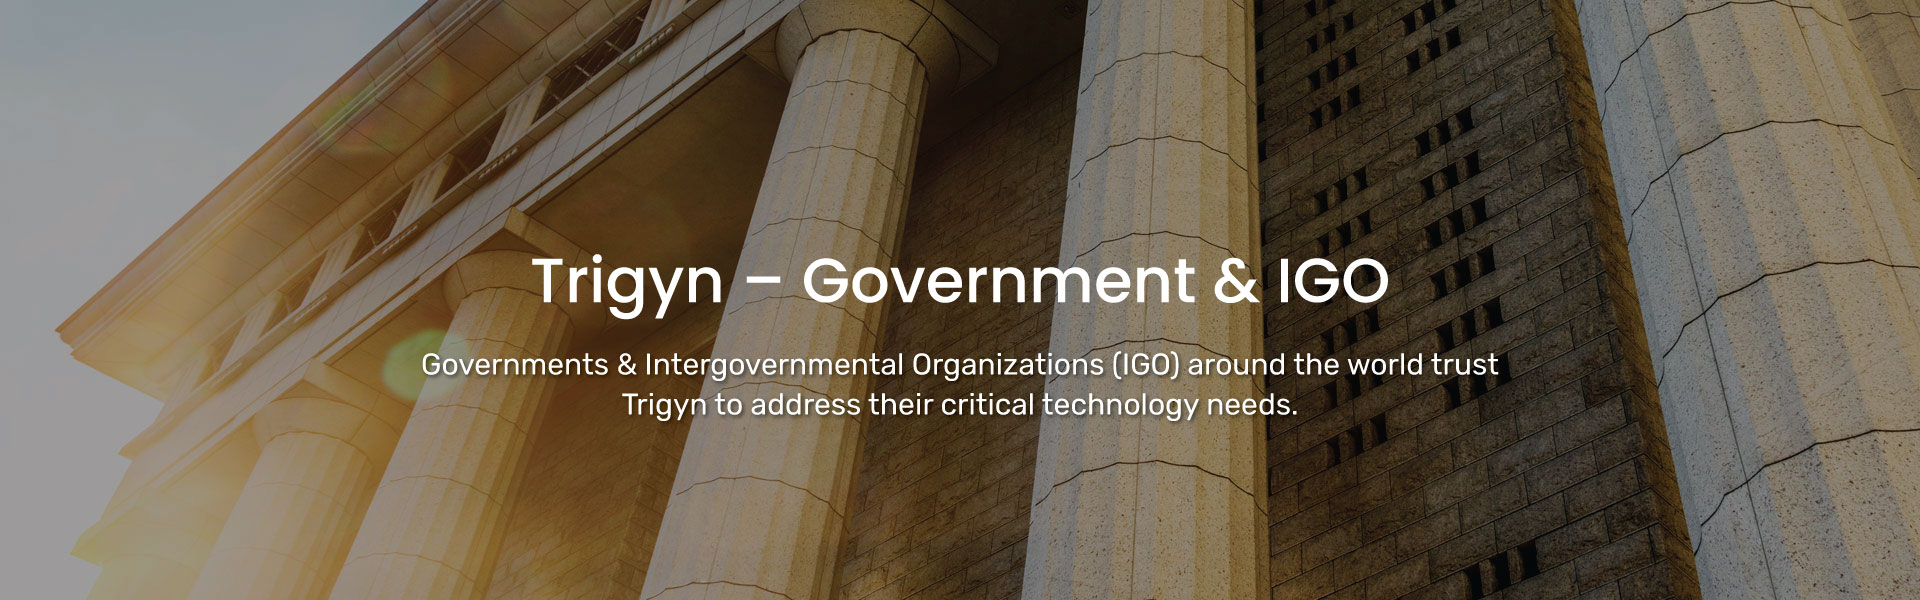 Trigyn’s Government and IGO Capabilities